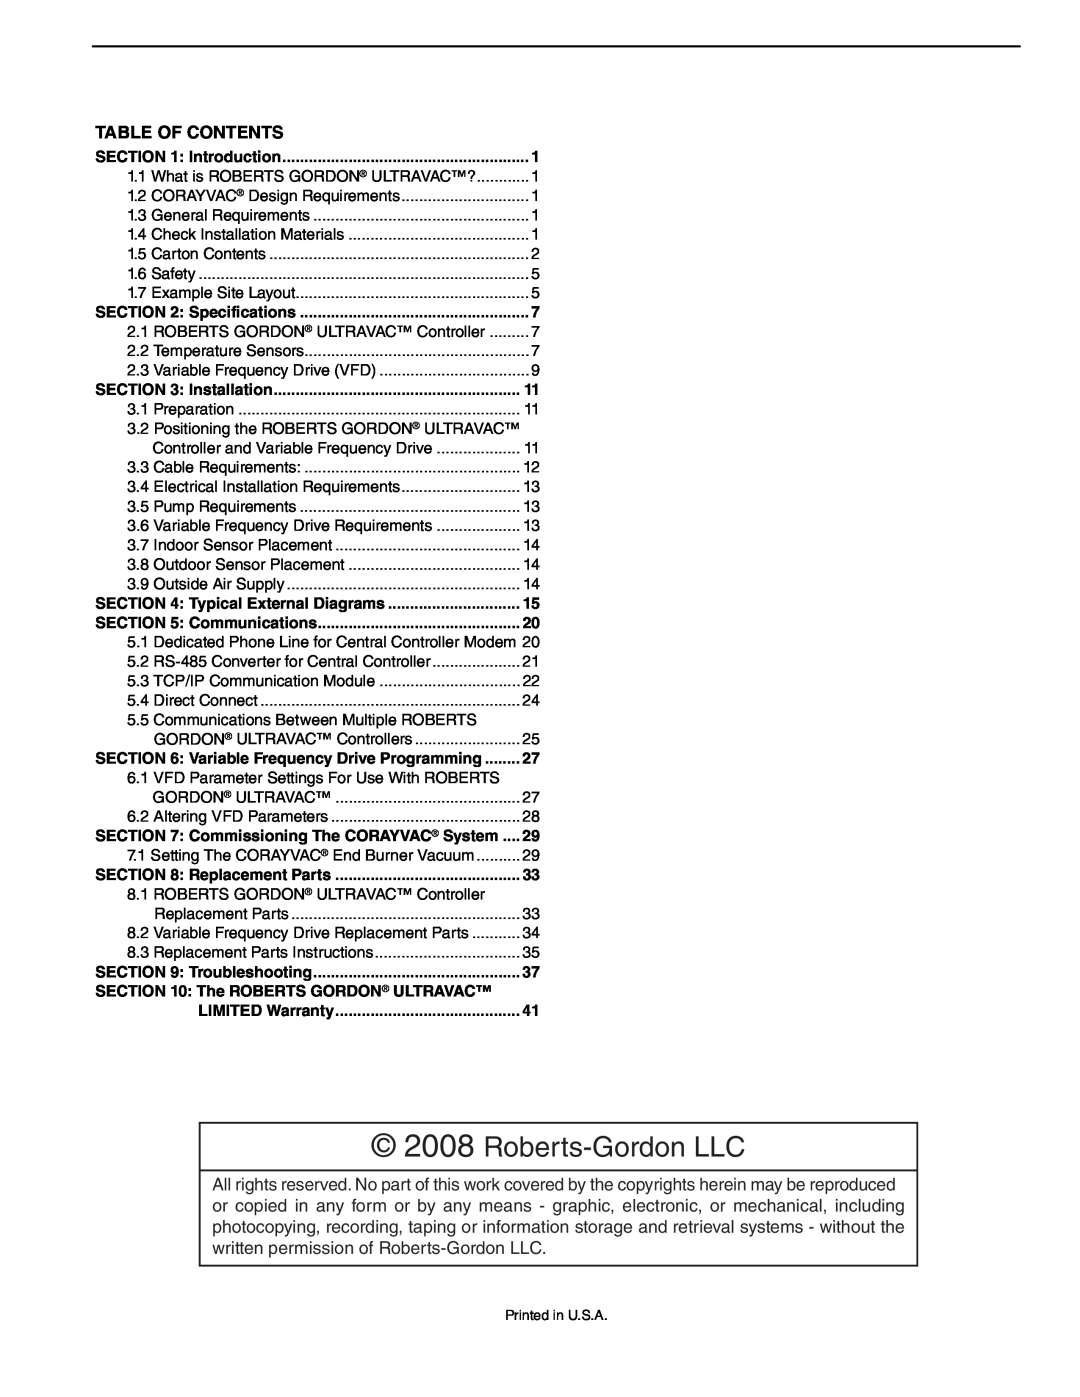 Roberts Gorden NEMA 4 installation manual Roberts-GordonLLC, Table Of Contents 